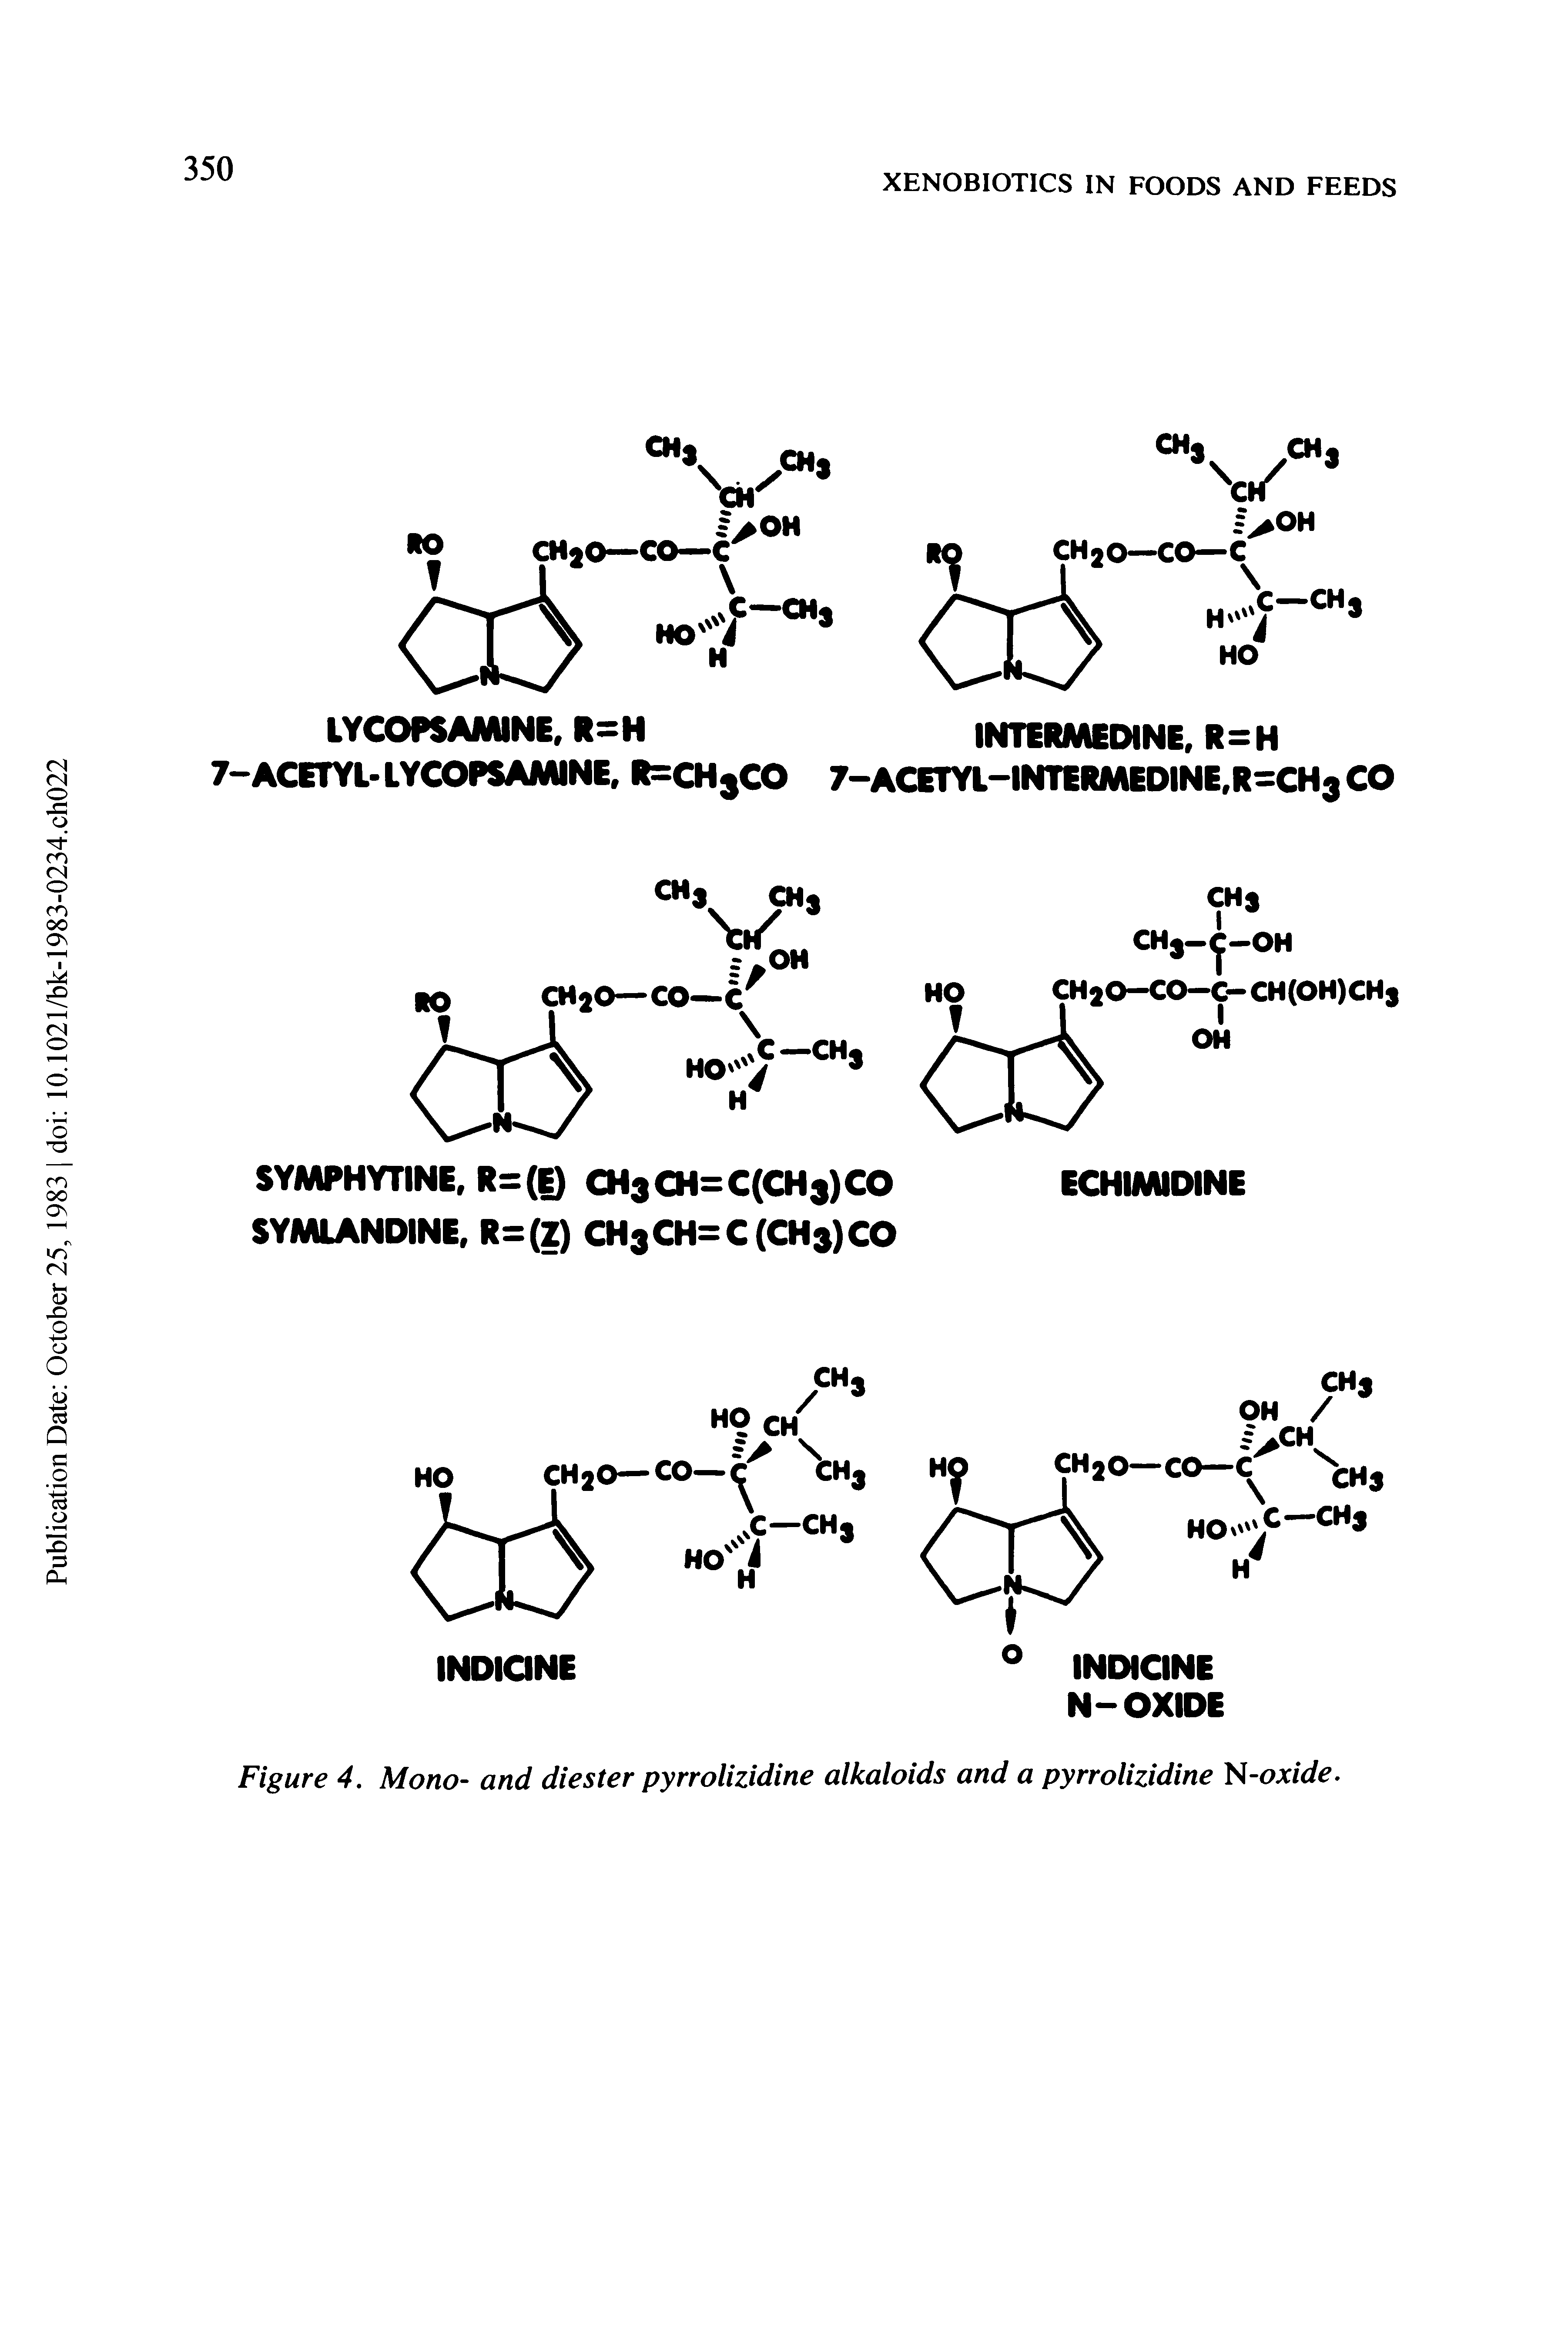 Figure 4. Mono- and diester pyrrolizidine alkaloids and a pyrrolizidine N-oxide.